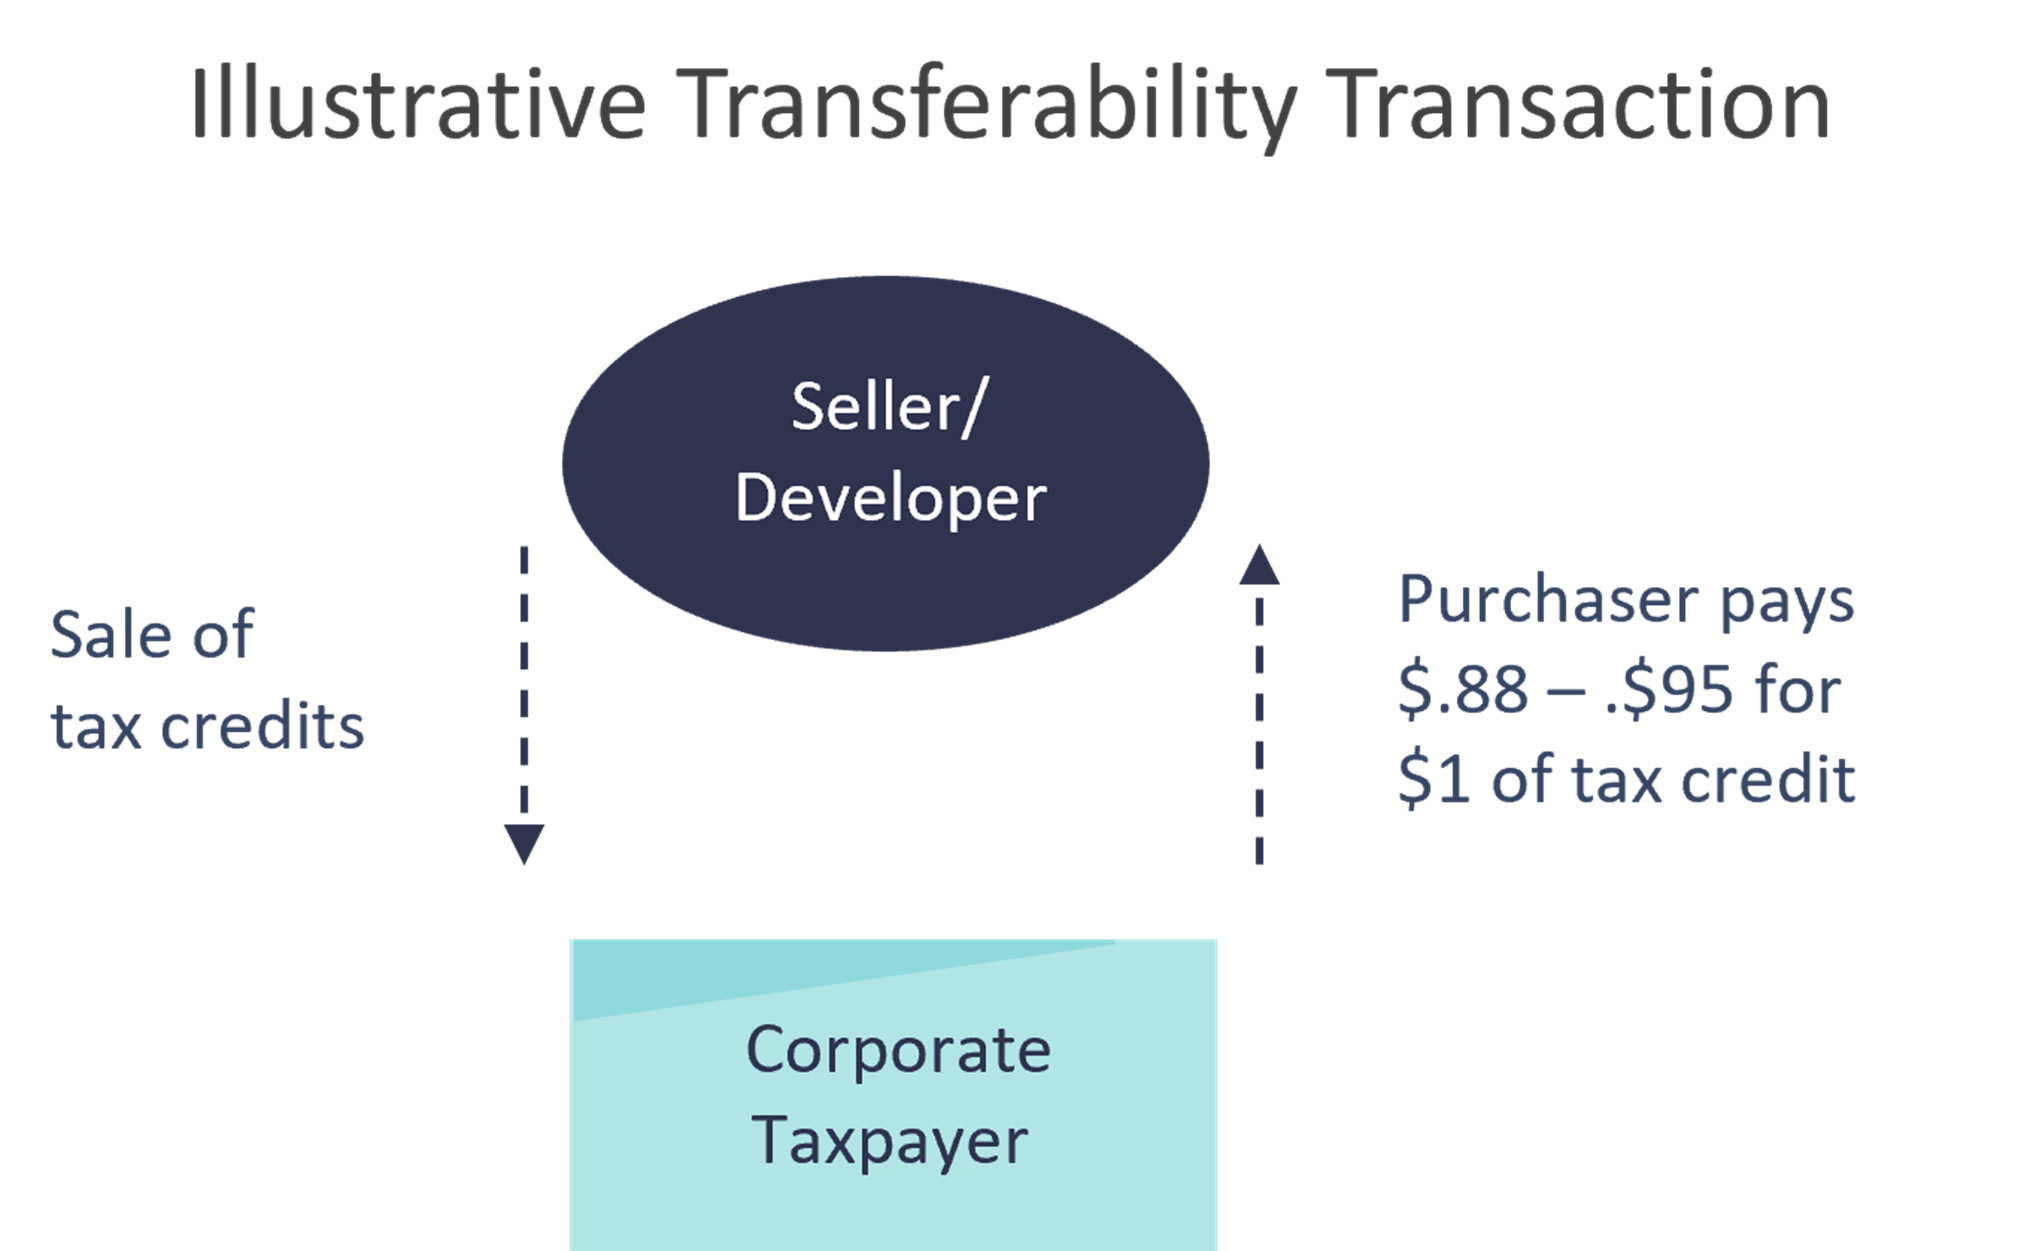 Illustrative Transferability Transaction